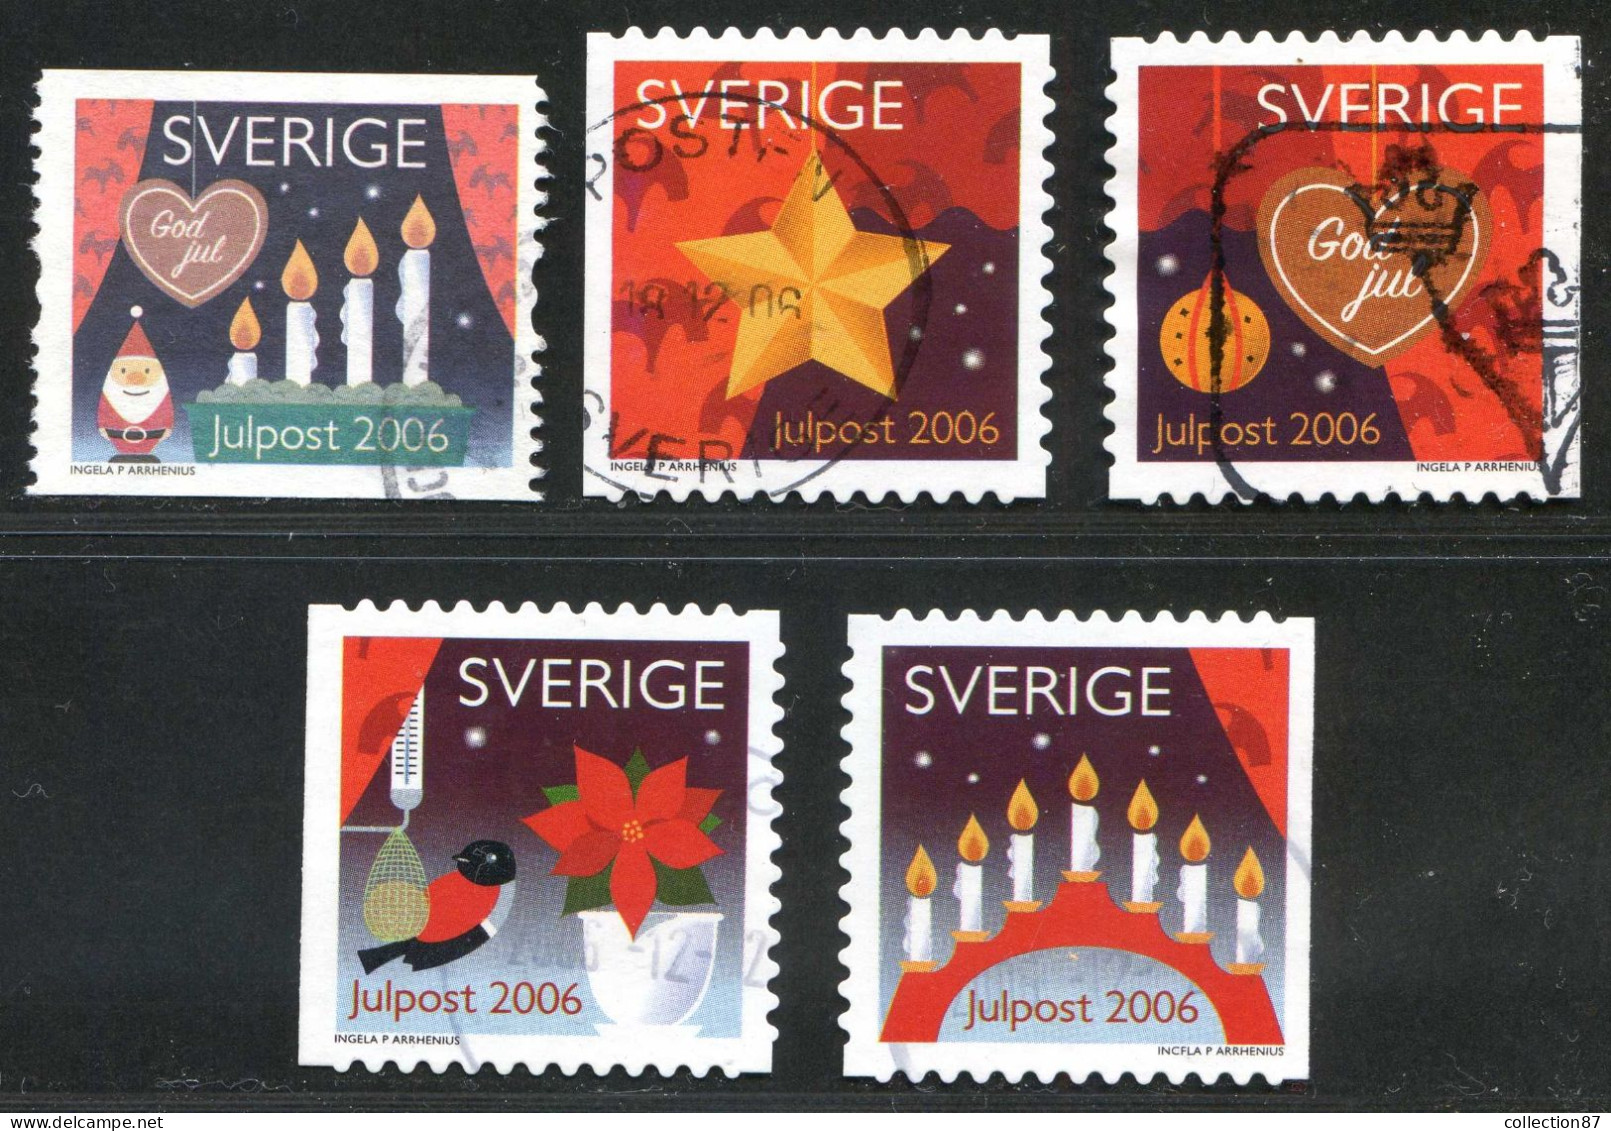 Réf 77 < SUEDE Année 2006 < Yvert N° 2542 à 2546 Ø Used < SWEDEN < Noel < Bougies Etoile - Used Stamps